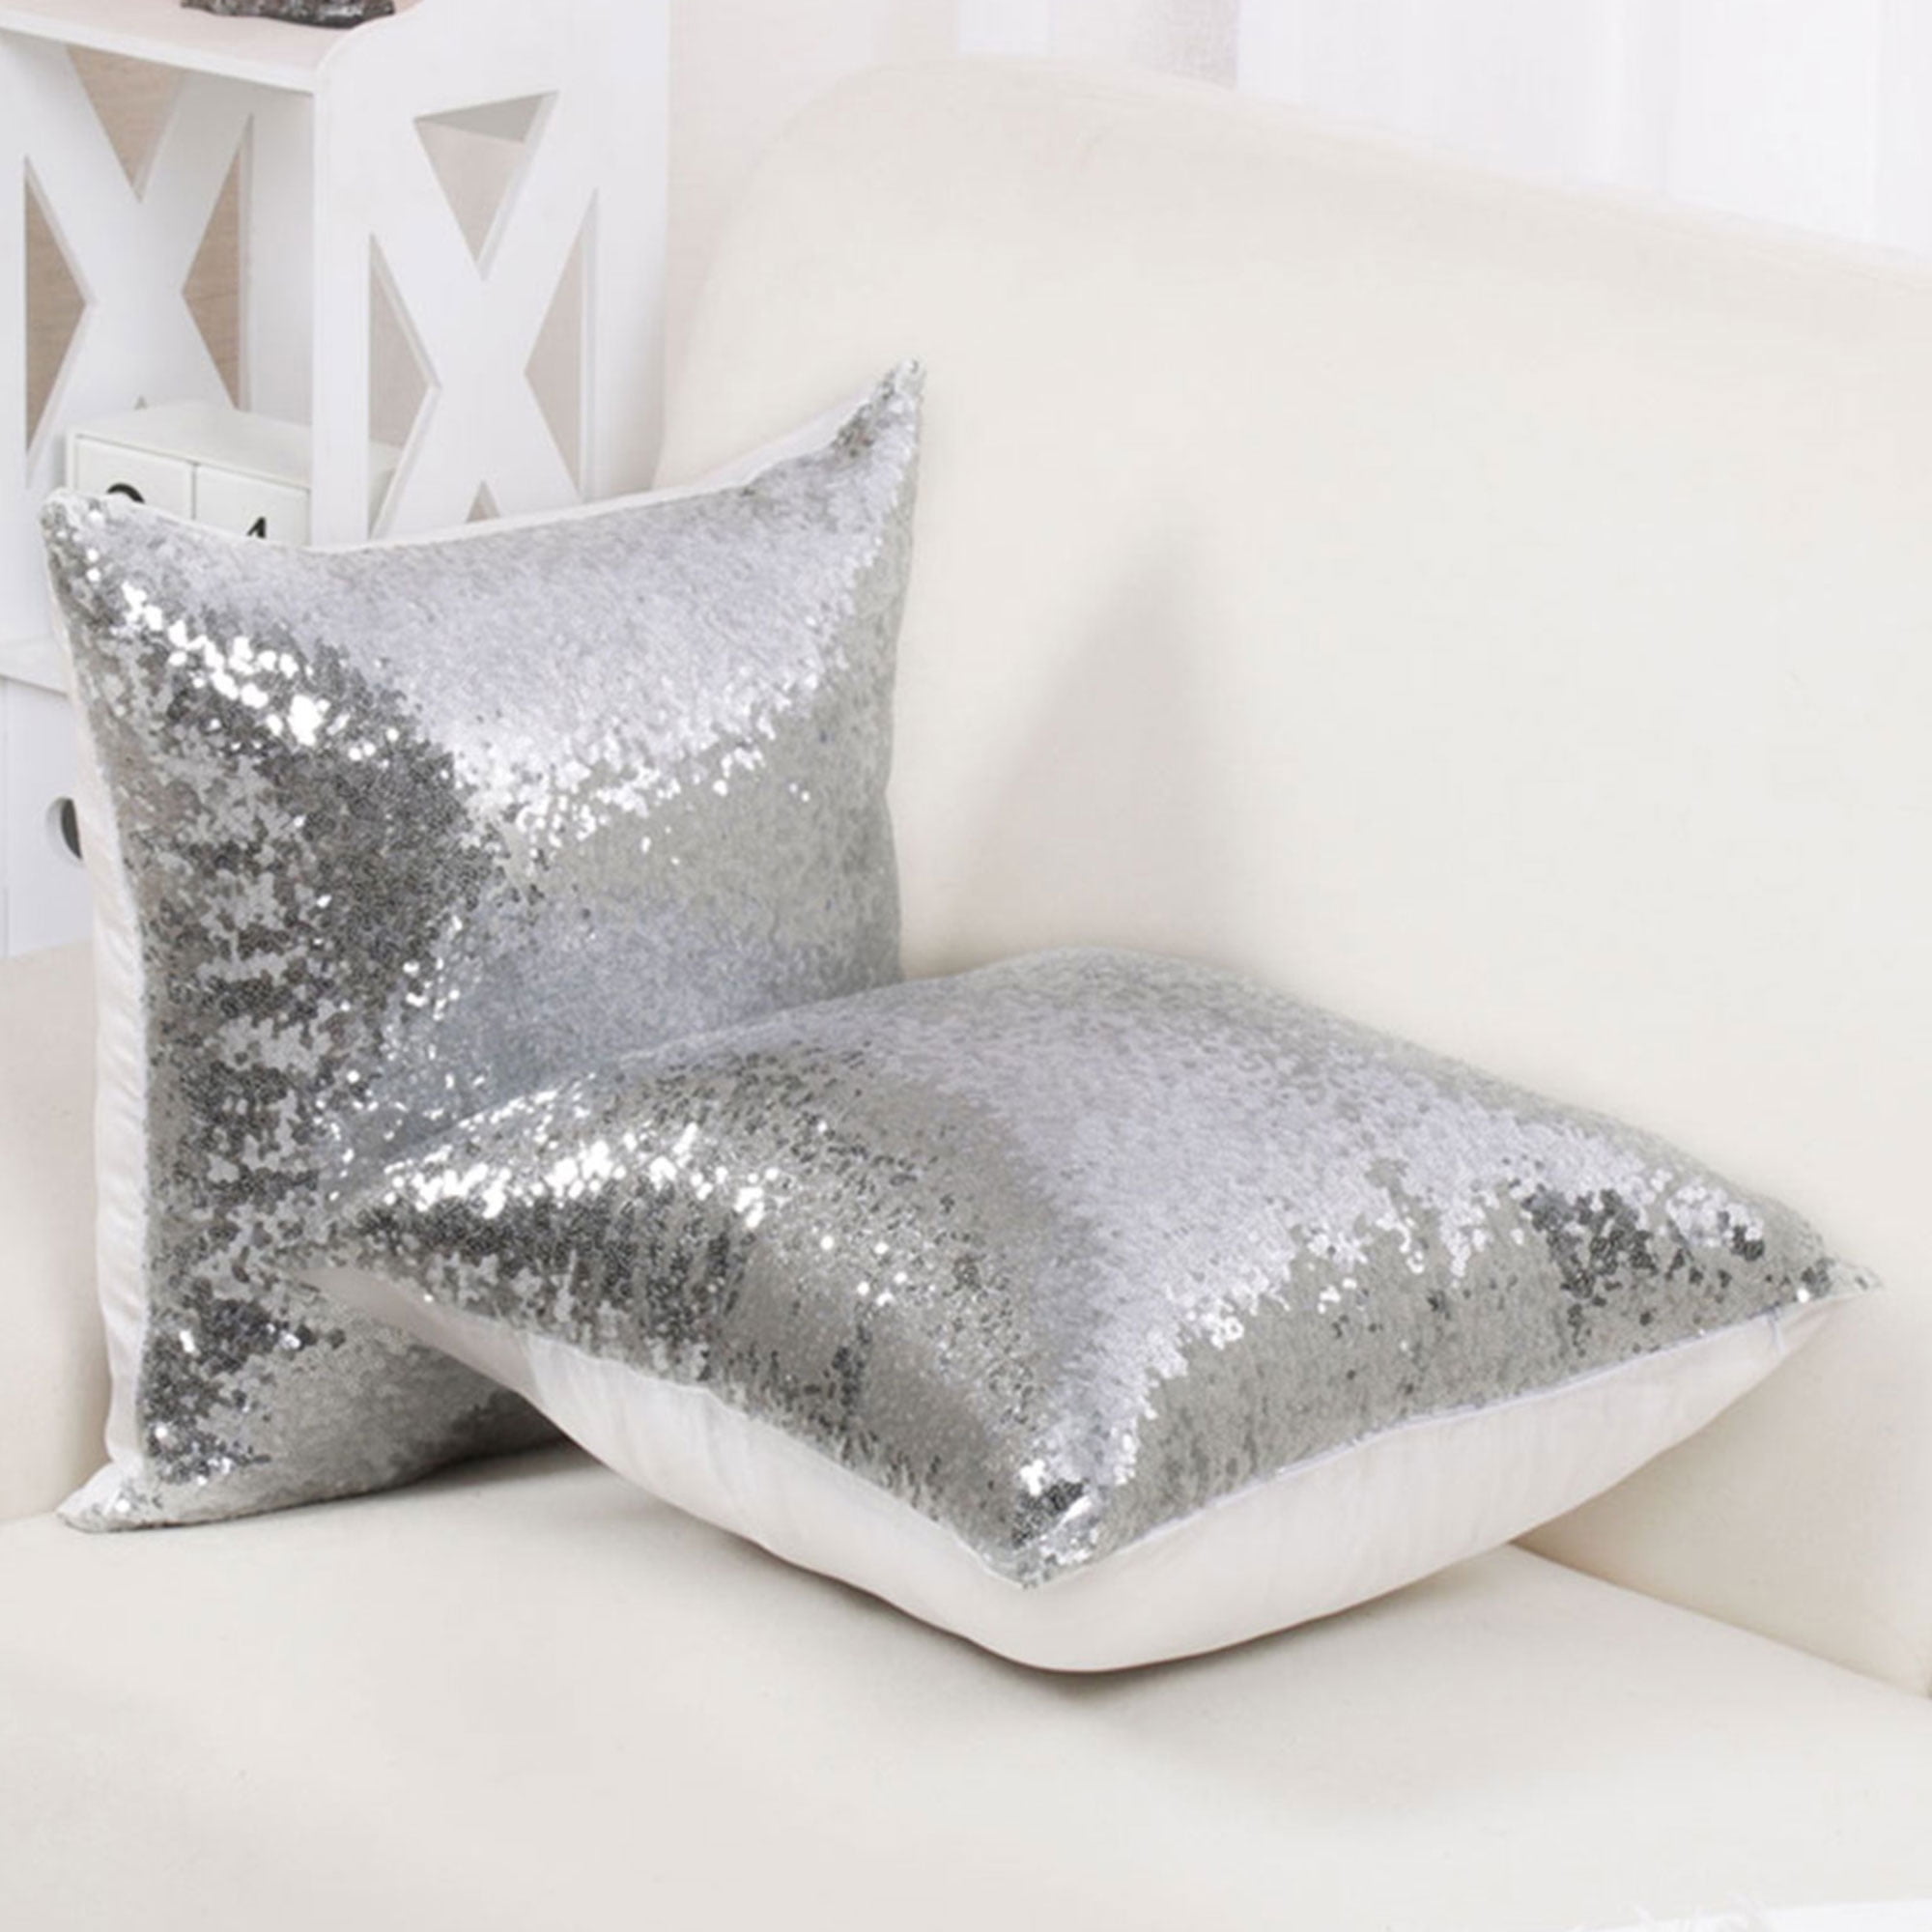 Piccocasa Decors Sequin Pillow Covers Shiny Sparkling Comfy Satin